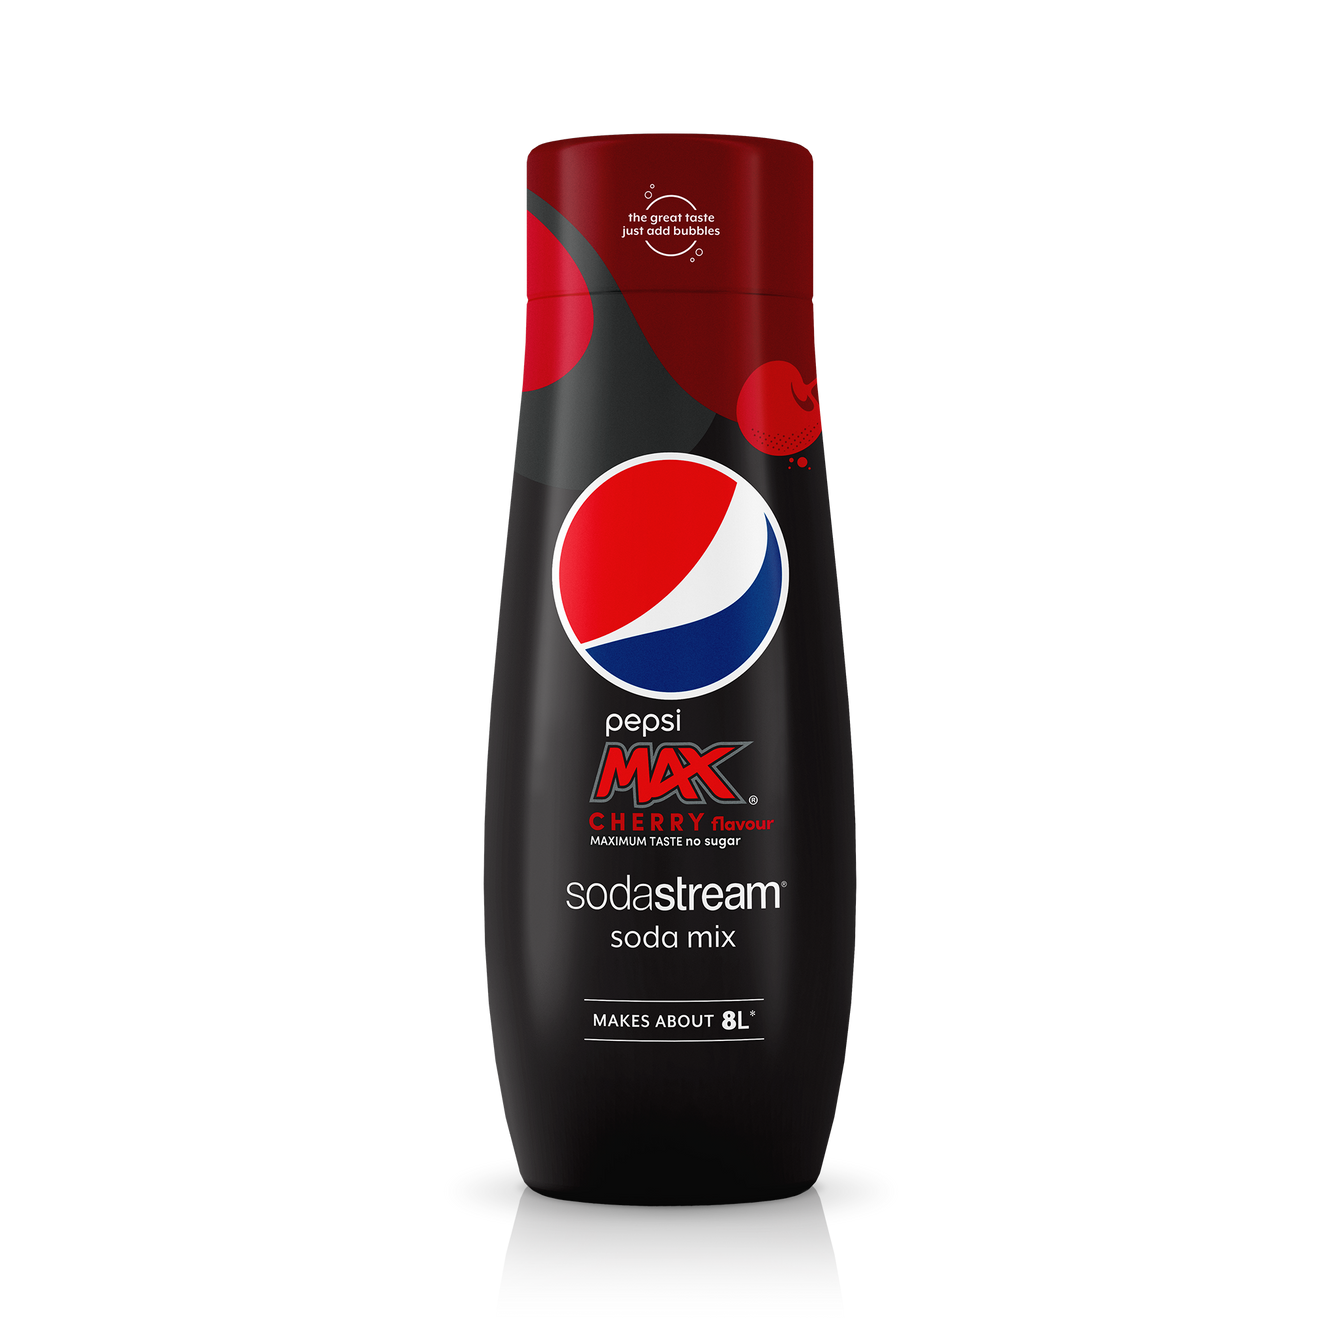 sodastream Pepsi Max Cherry